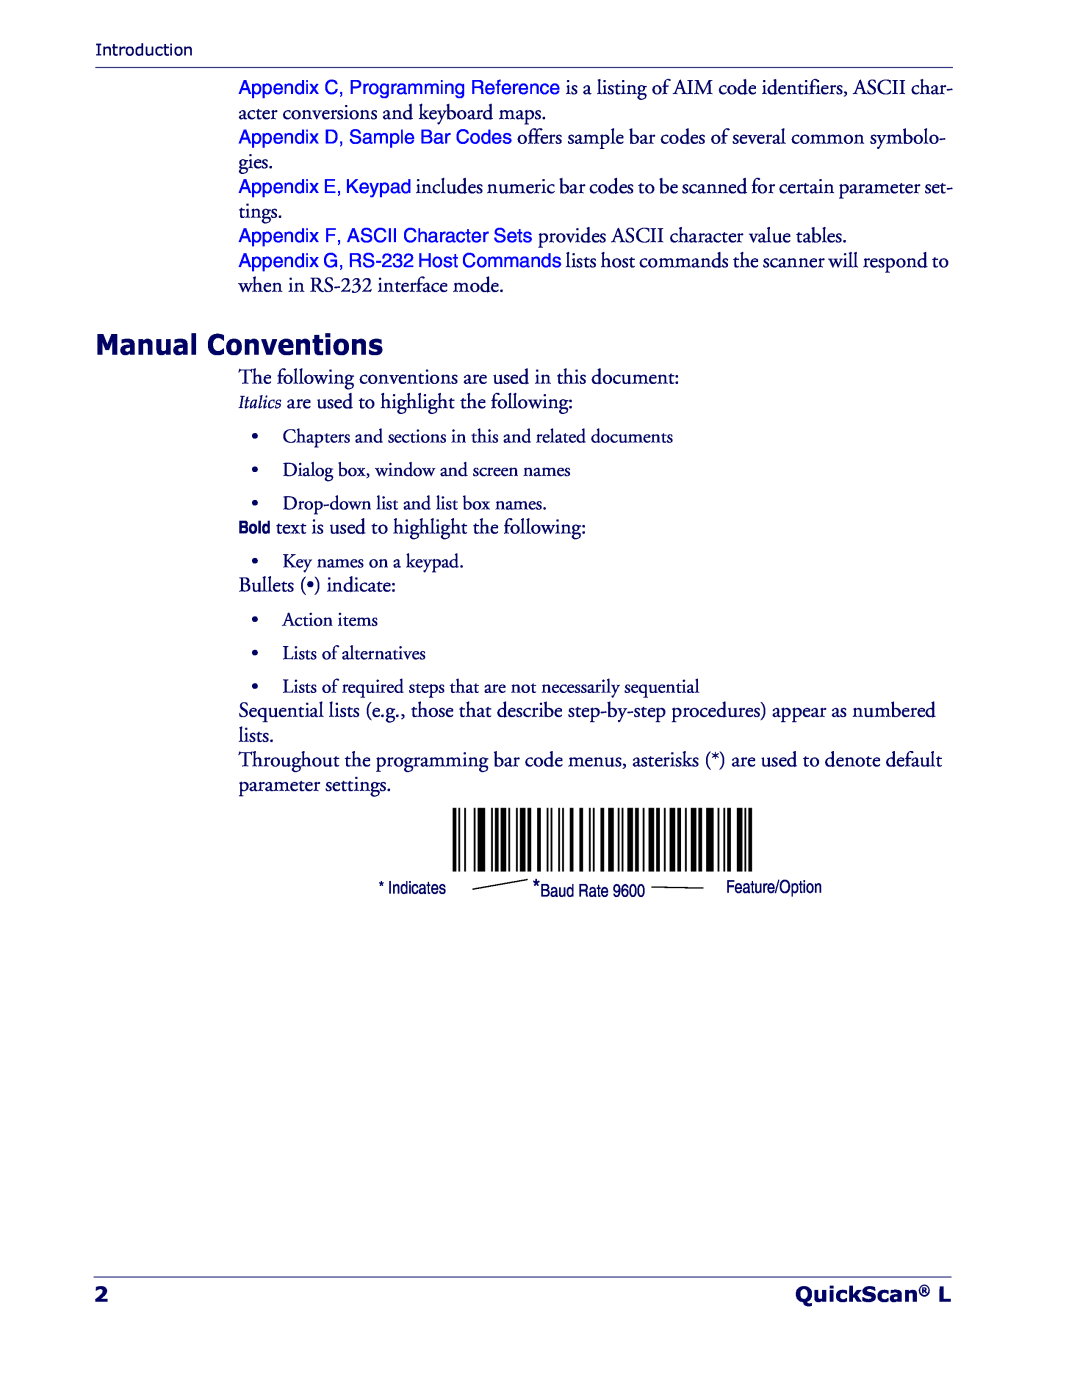 Datalogic Scanning QD 2300 manual Manual Conventions, QuickScan L 